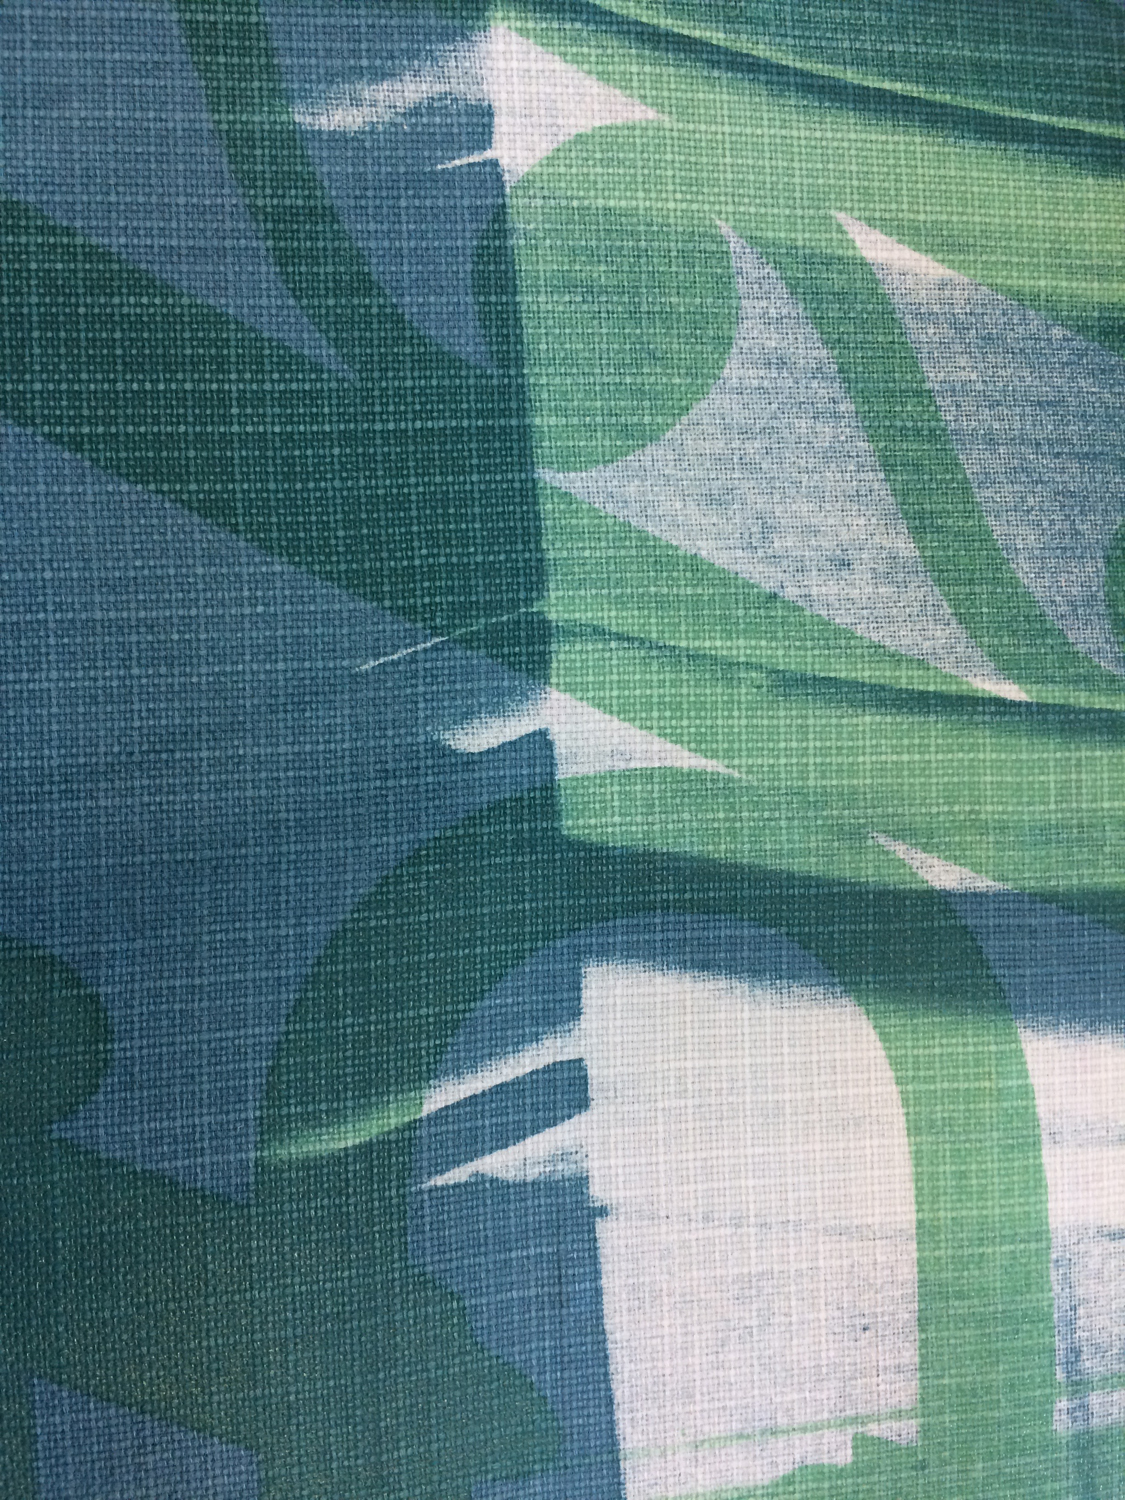 Textile artist | artists statement | Michelle House